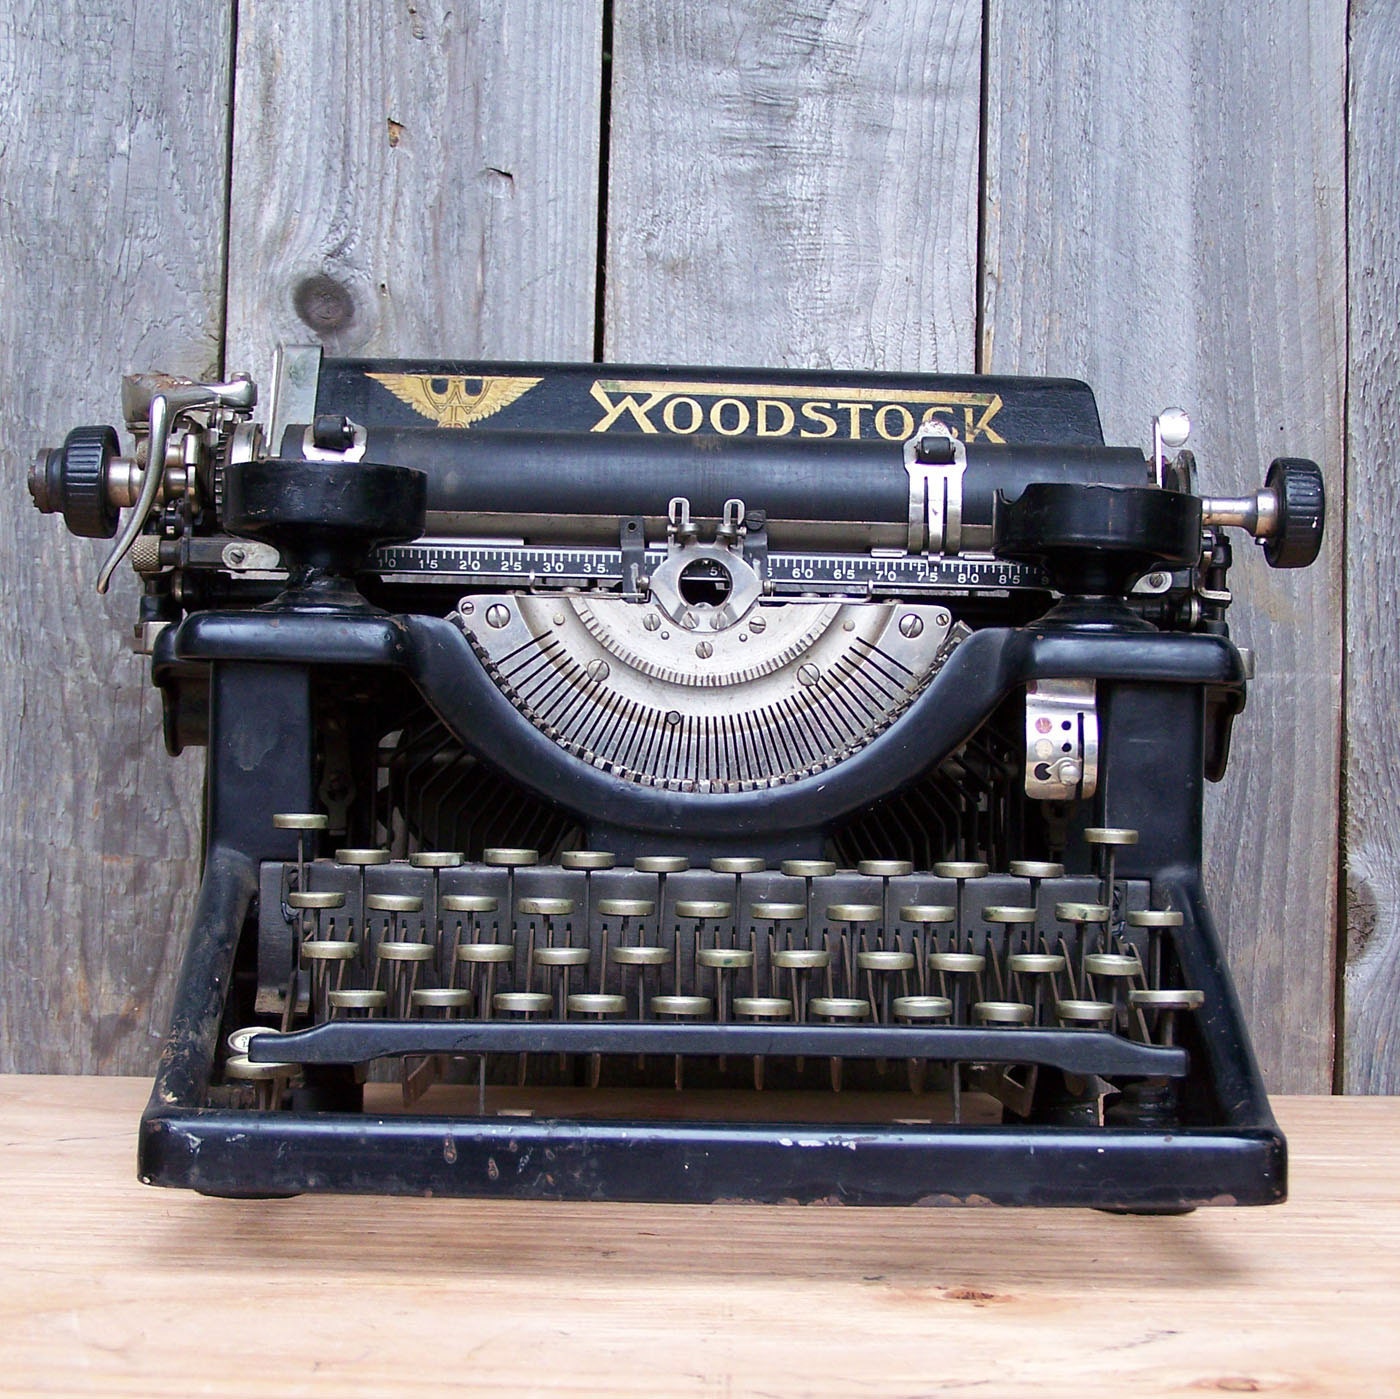 1925 Antique Woodstock Typewriter